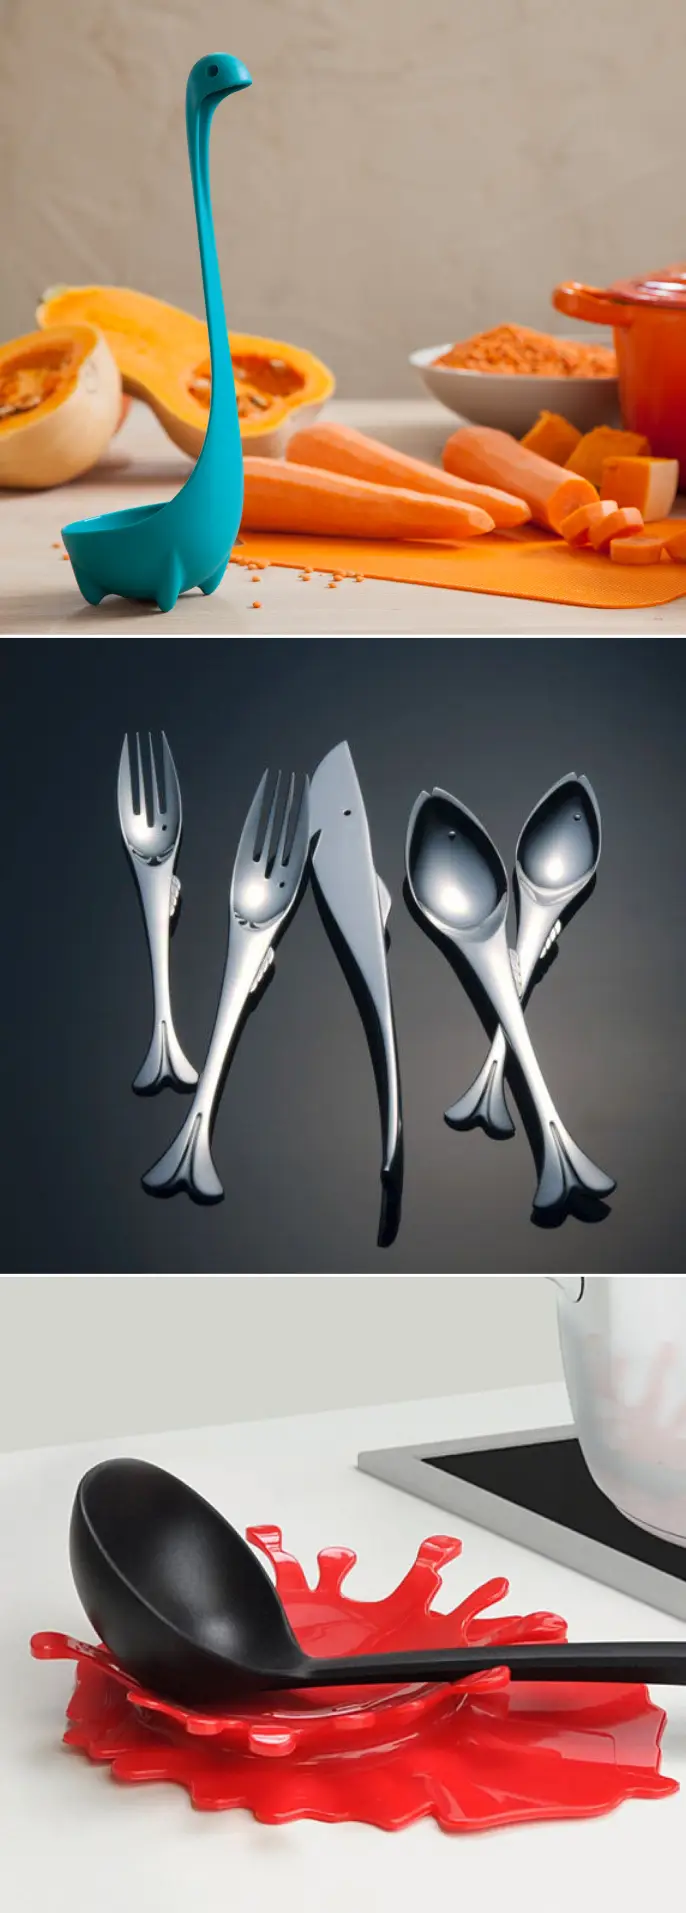 https://www.dontpayfull.com/blog/wp-content/uploads/2015/04/The-Cutest-20-Household-Gadgets-Soup-Spoons.jpg.webp